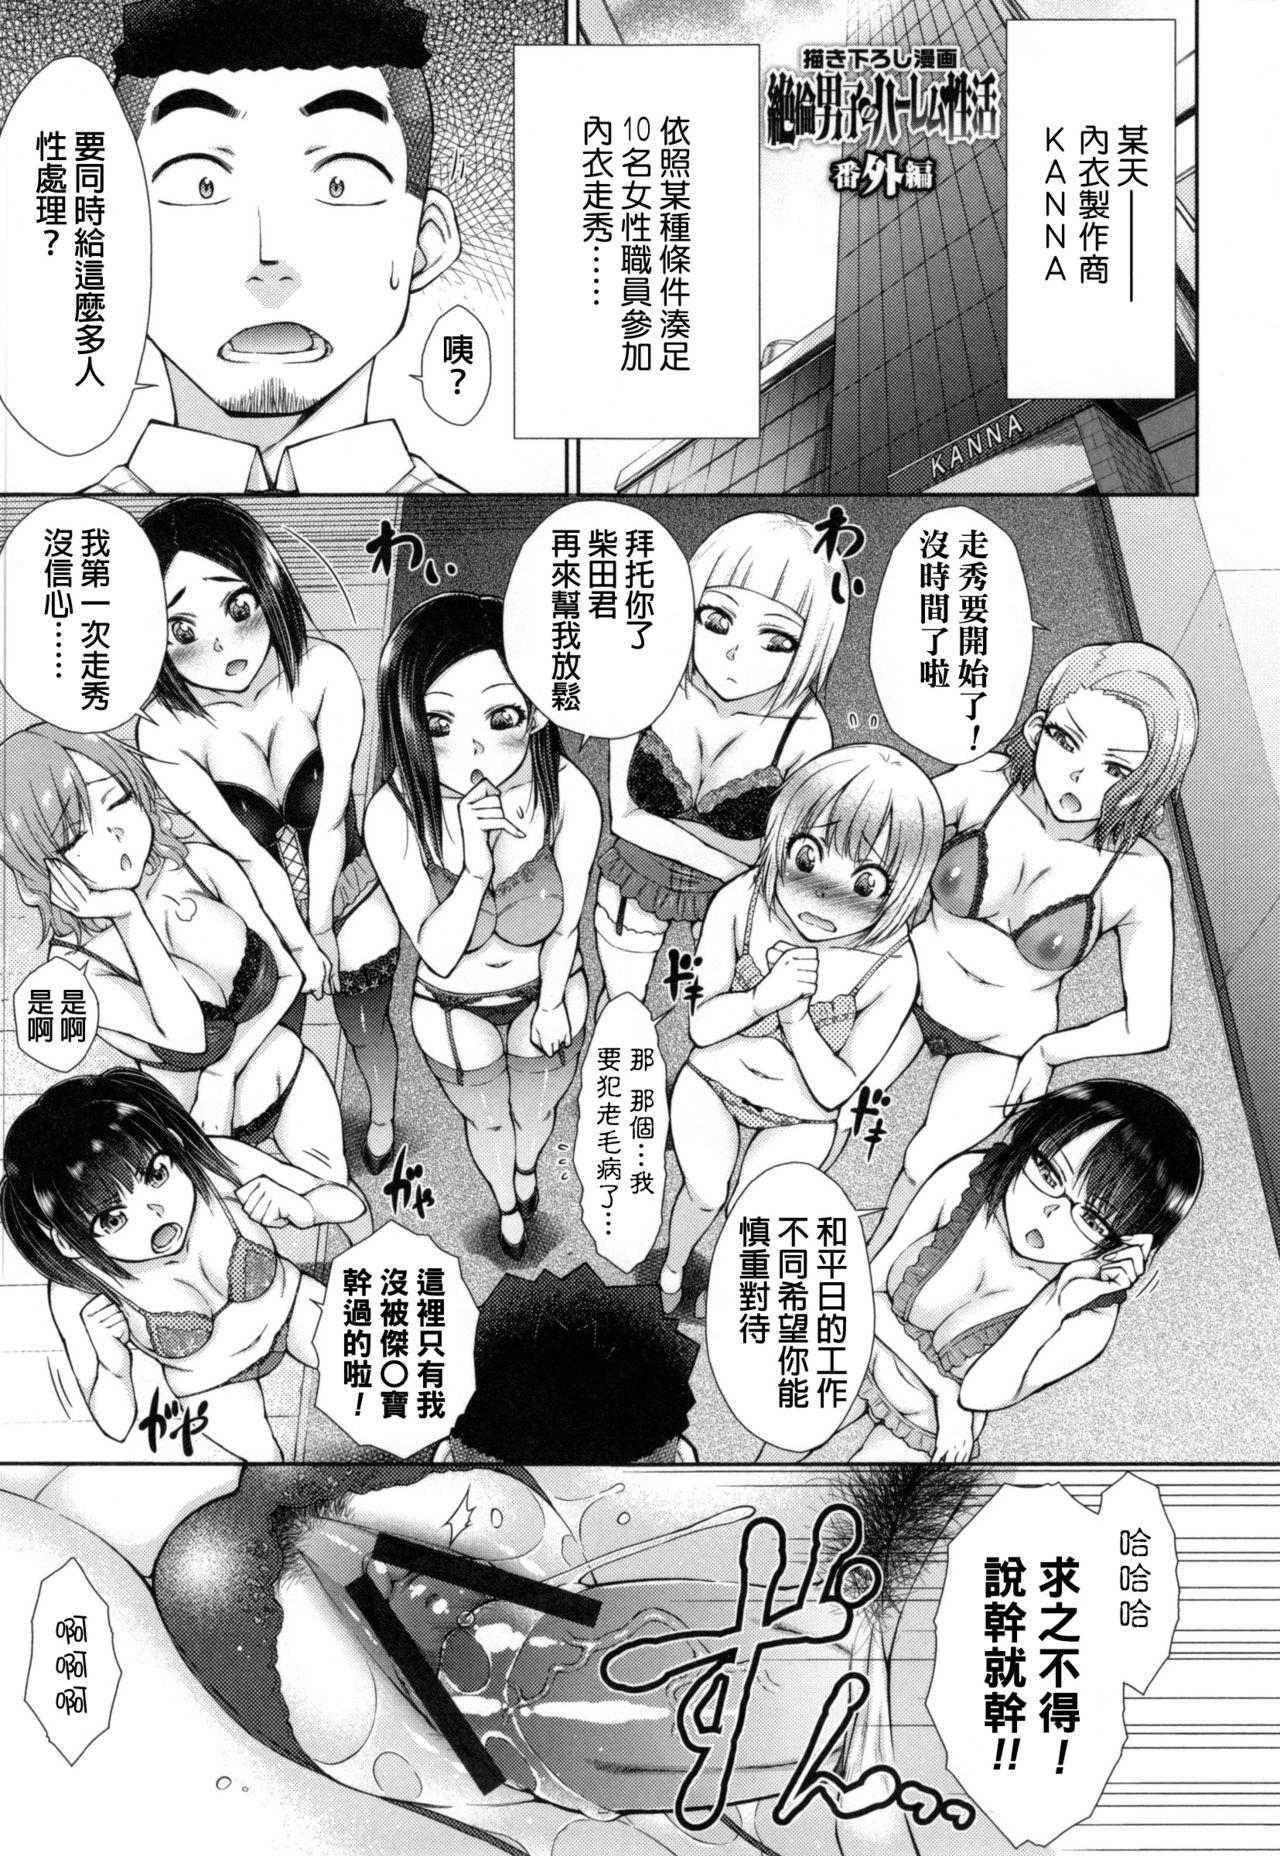 [Igarashi Shouno] Kochira Joshi Shain Senyou Seishorika - Sex Industry Division for Women's Employees Dedicated Ch. 1-2, 8 [Chinese] 51